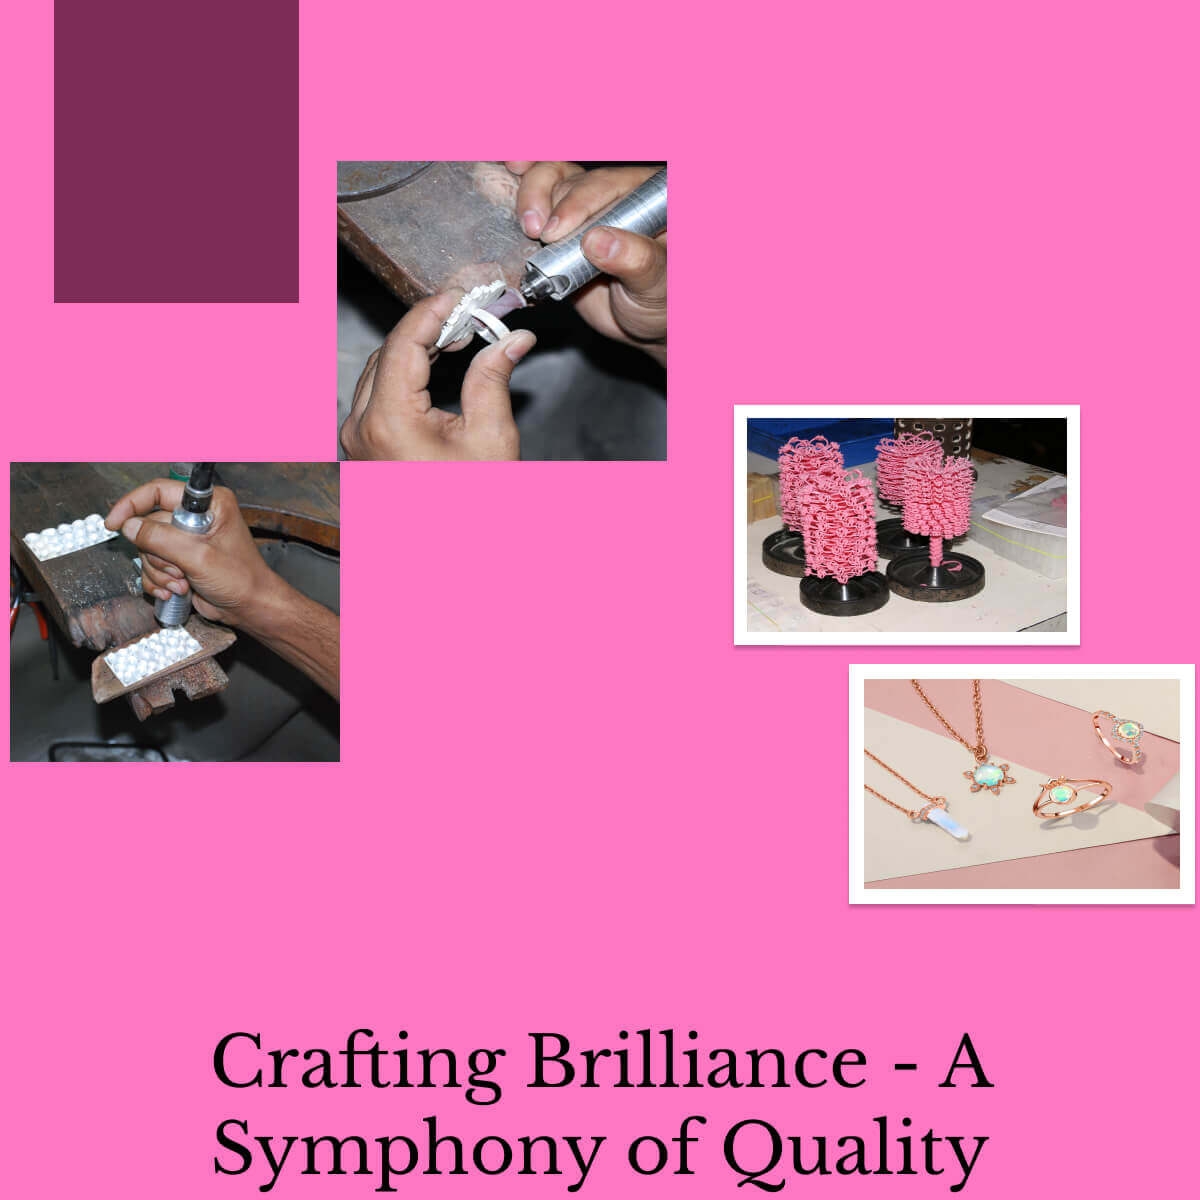 Craftsmanship and Quality